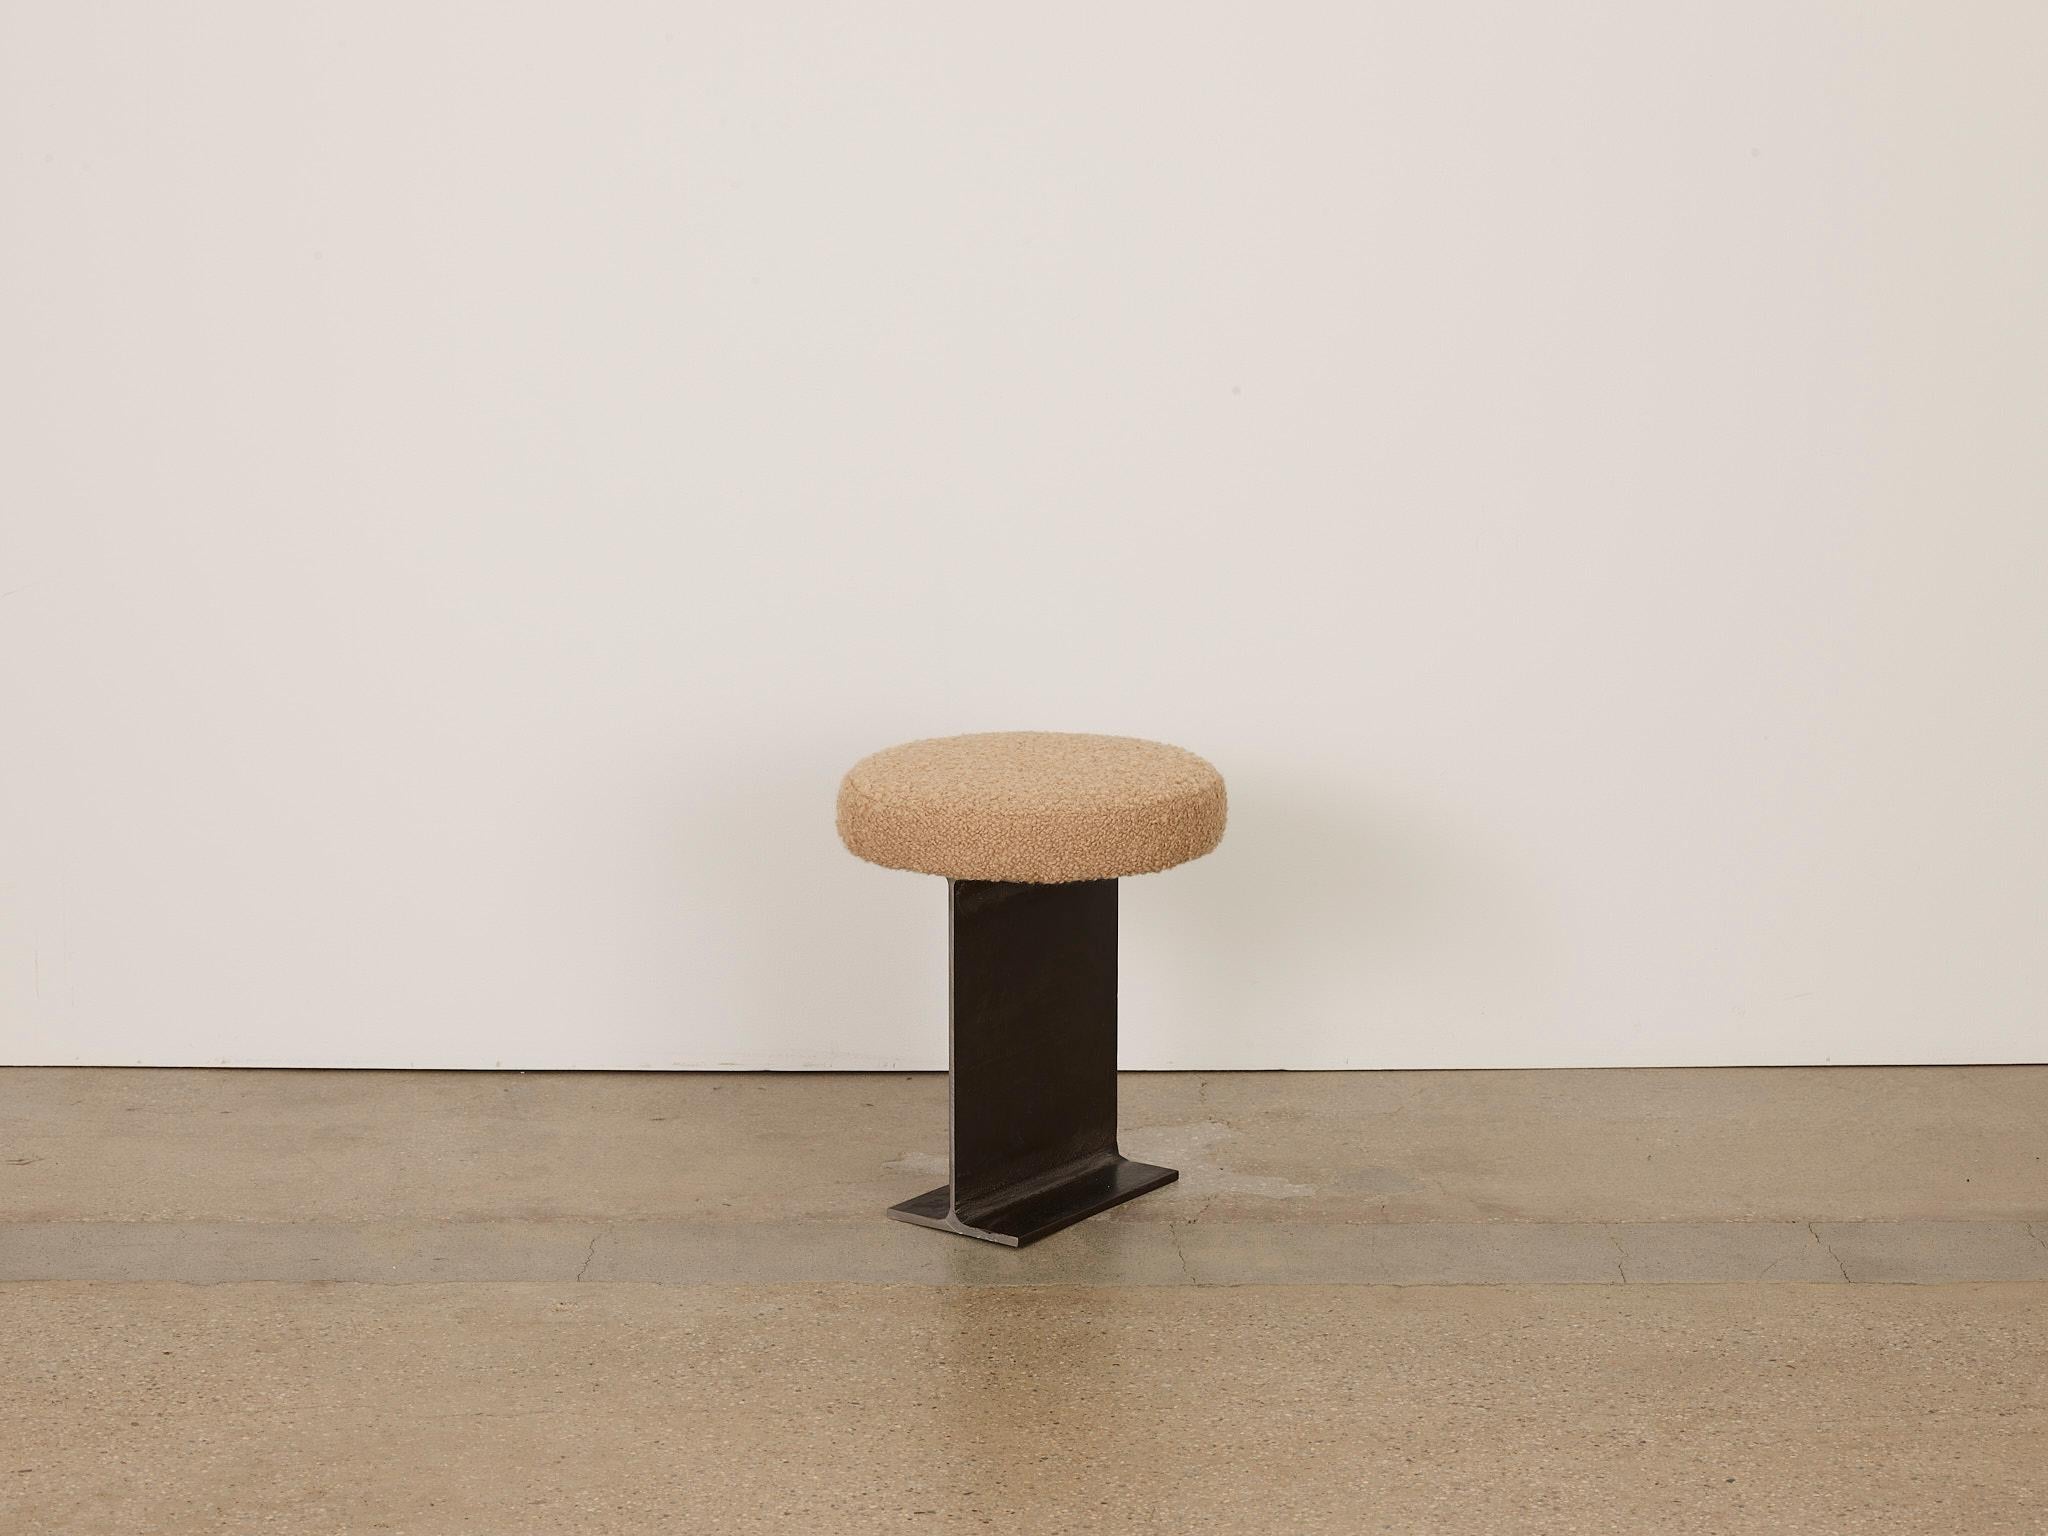 Trono Pill beige chair by Umberto Bellardi Ricci
Dimensions: Diameter 16